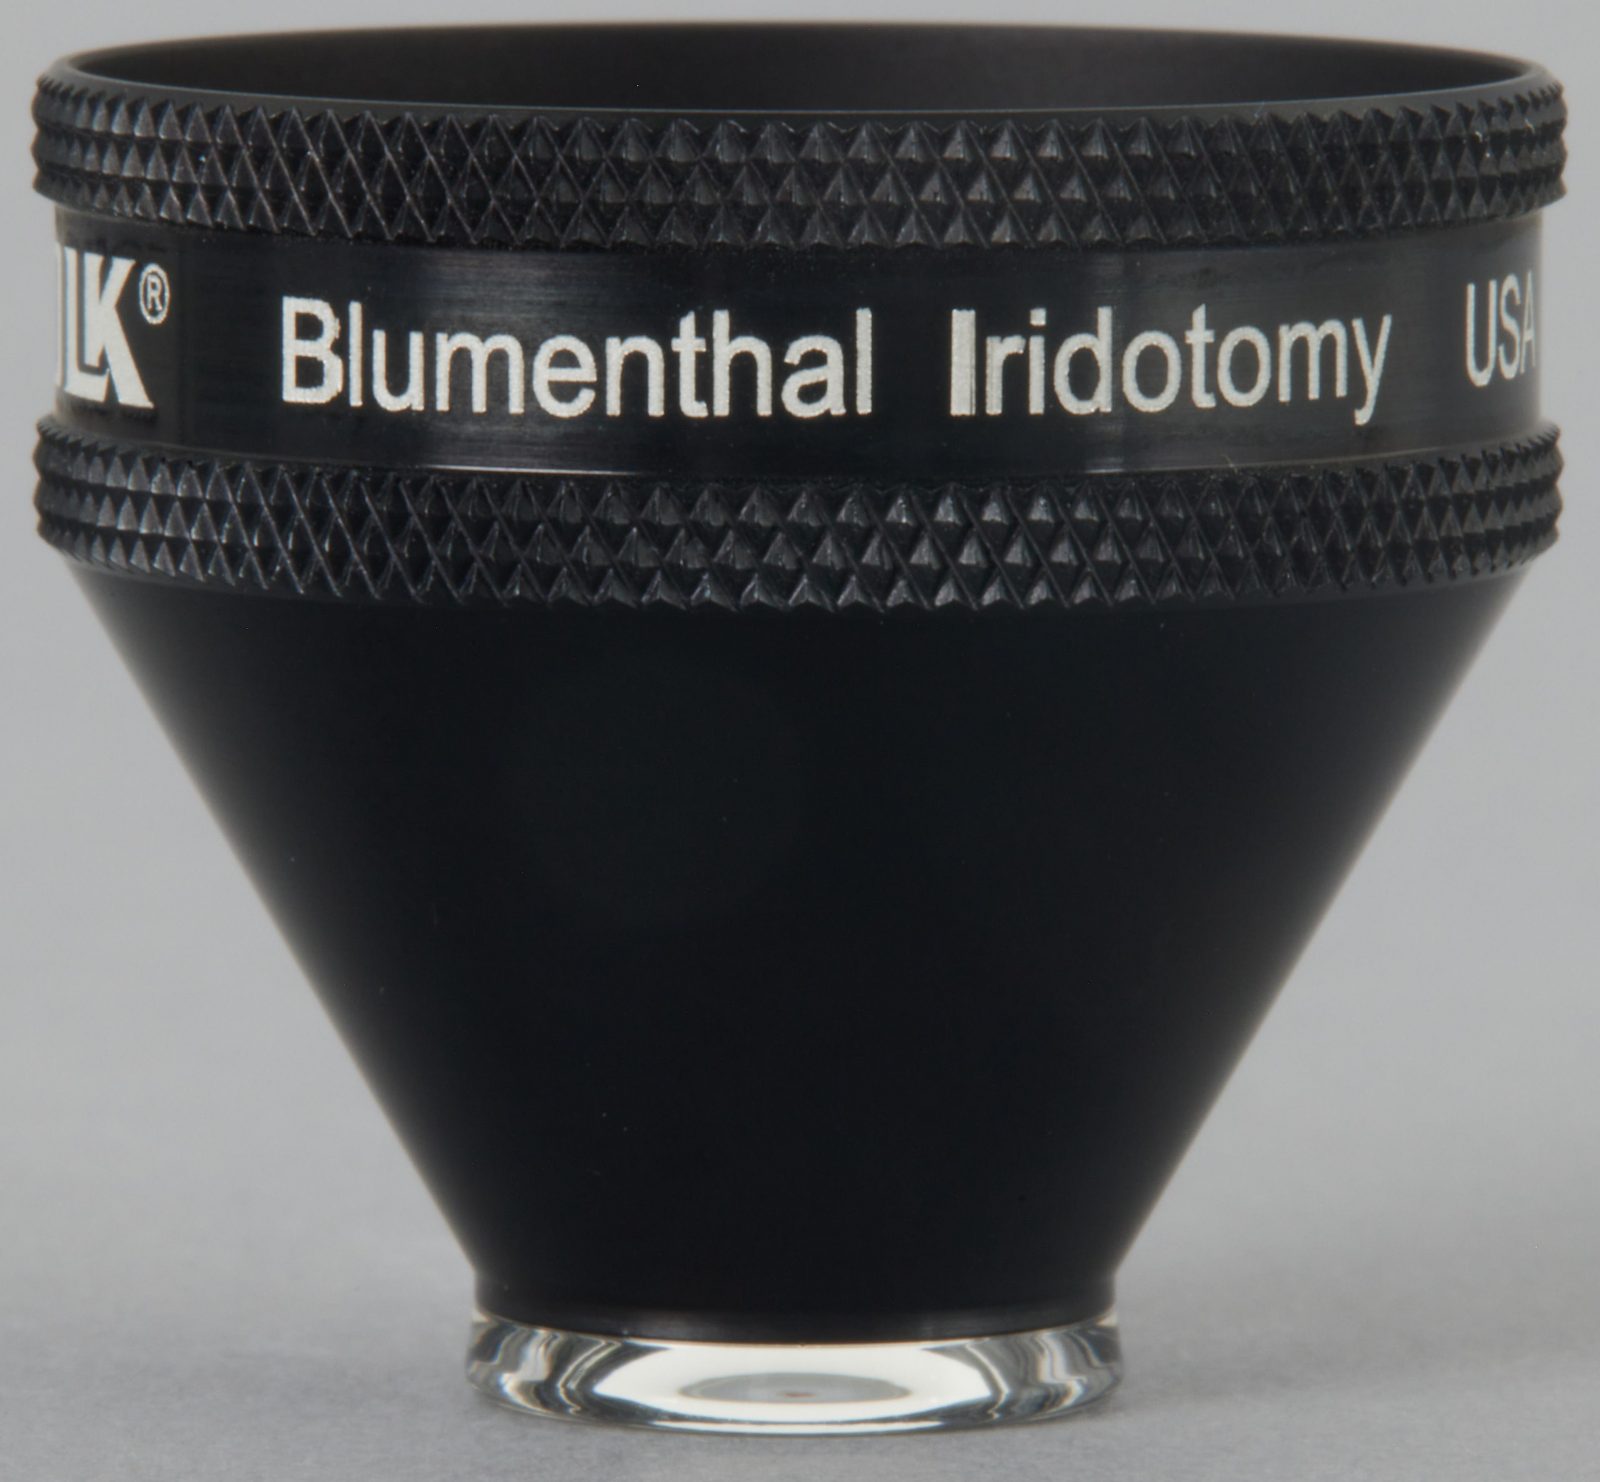 Blumenthal Iridotomy